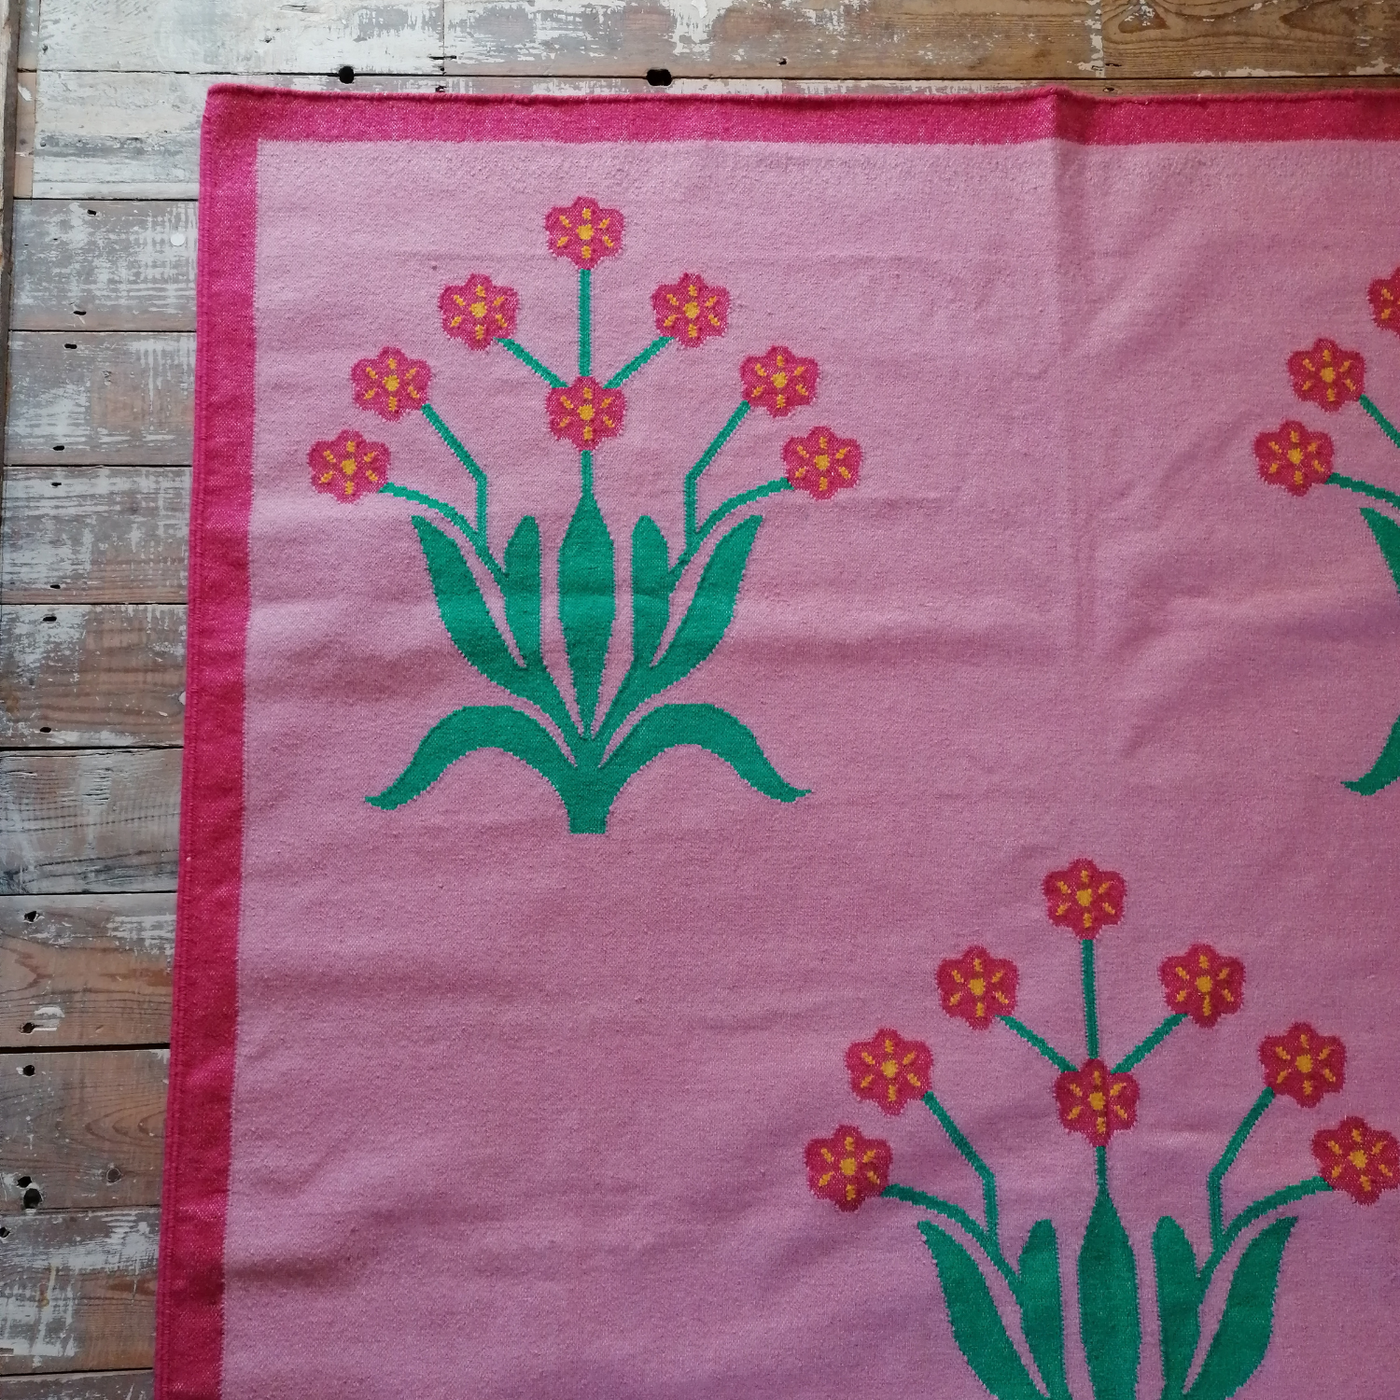 Chandigarh Flatweave Rug - Pink, Green & Yellow - 1.6 x 2.0m